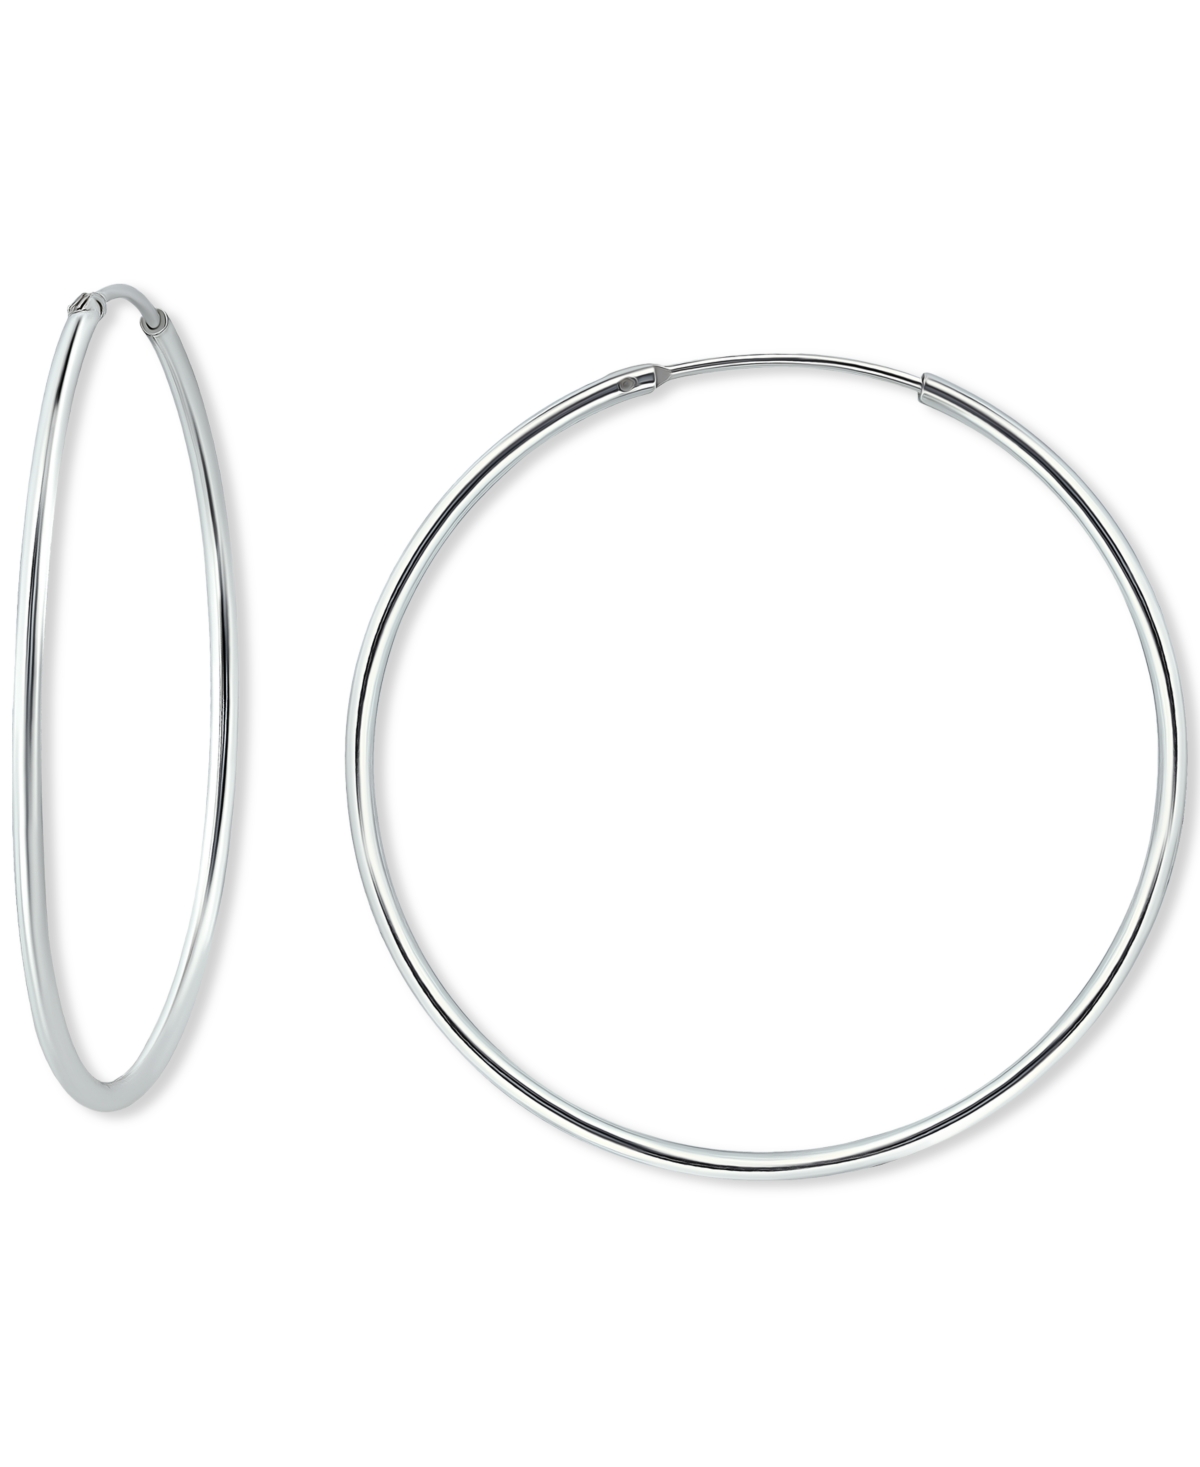 Giani Bernini Sterling Silver Polished Endless Medium (35mm) Hoop Earrings, Created for Macy's